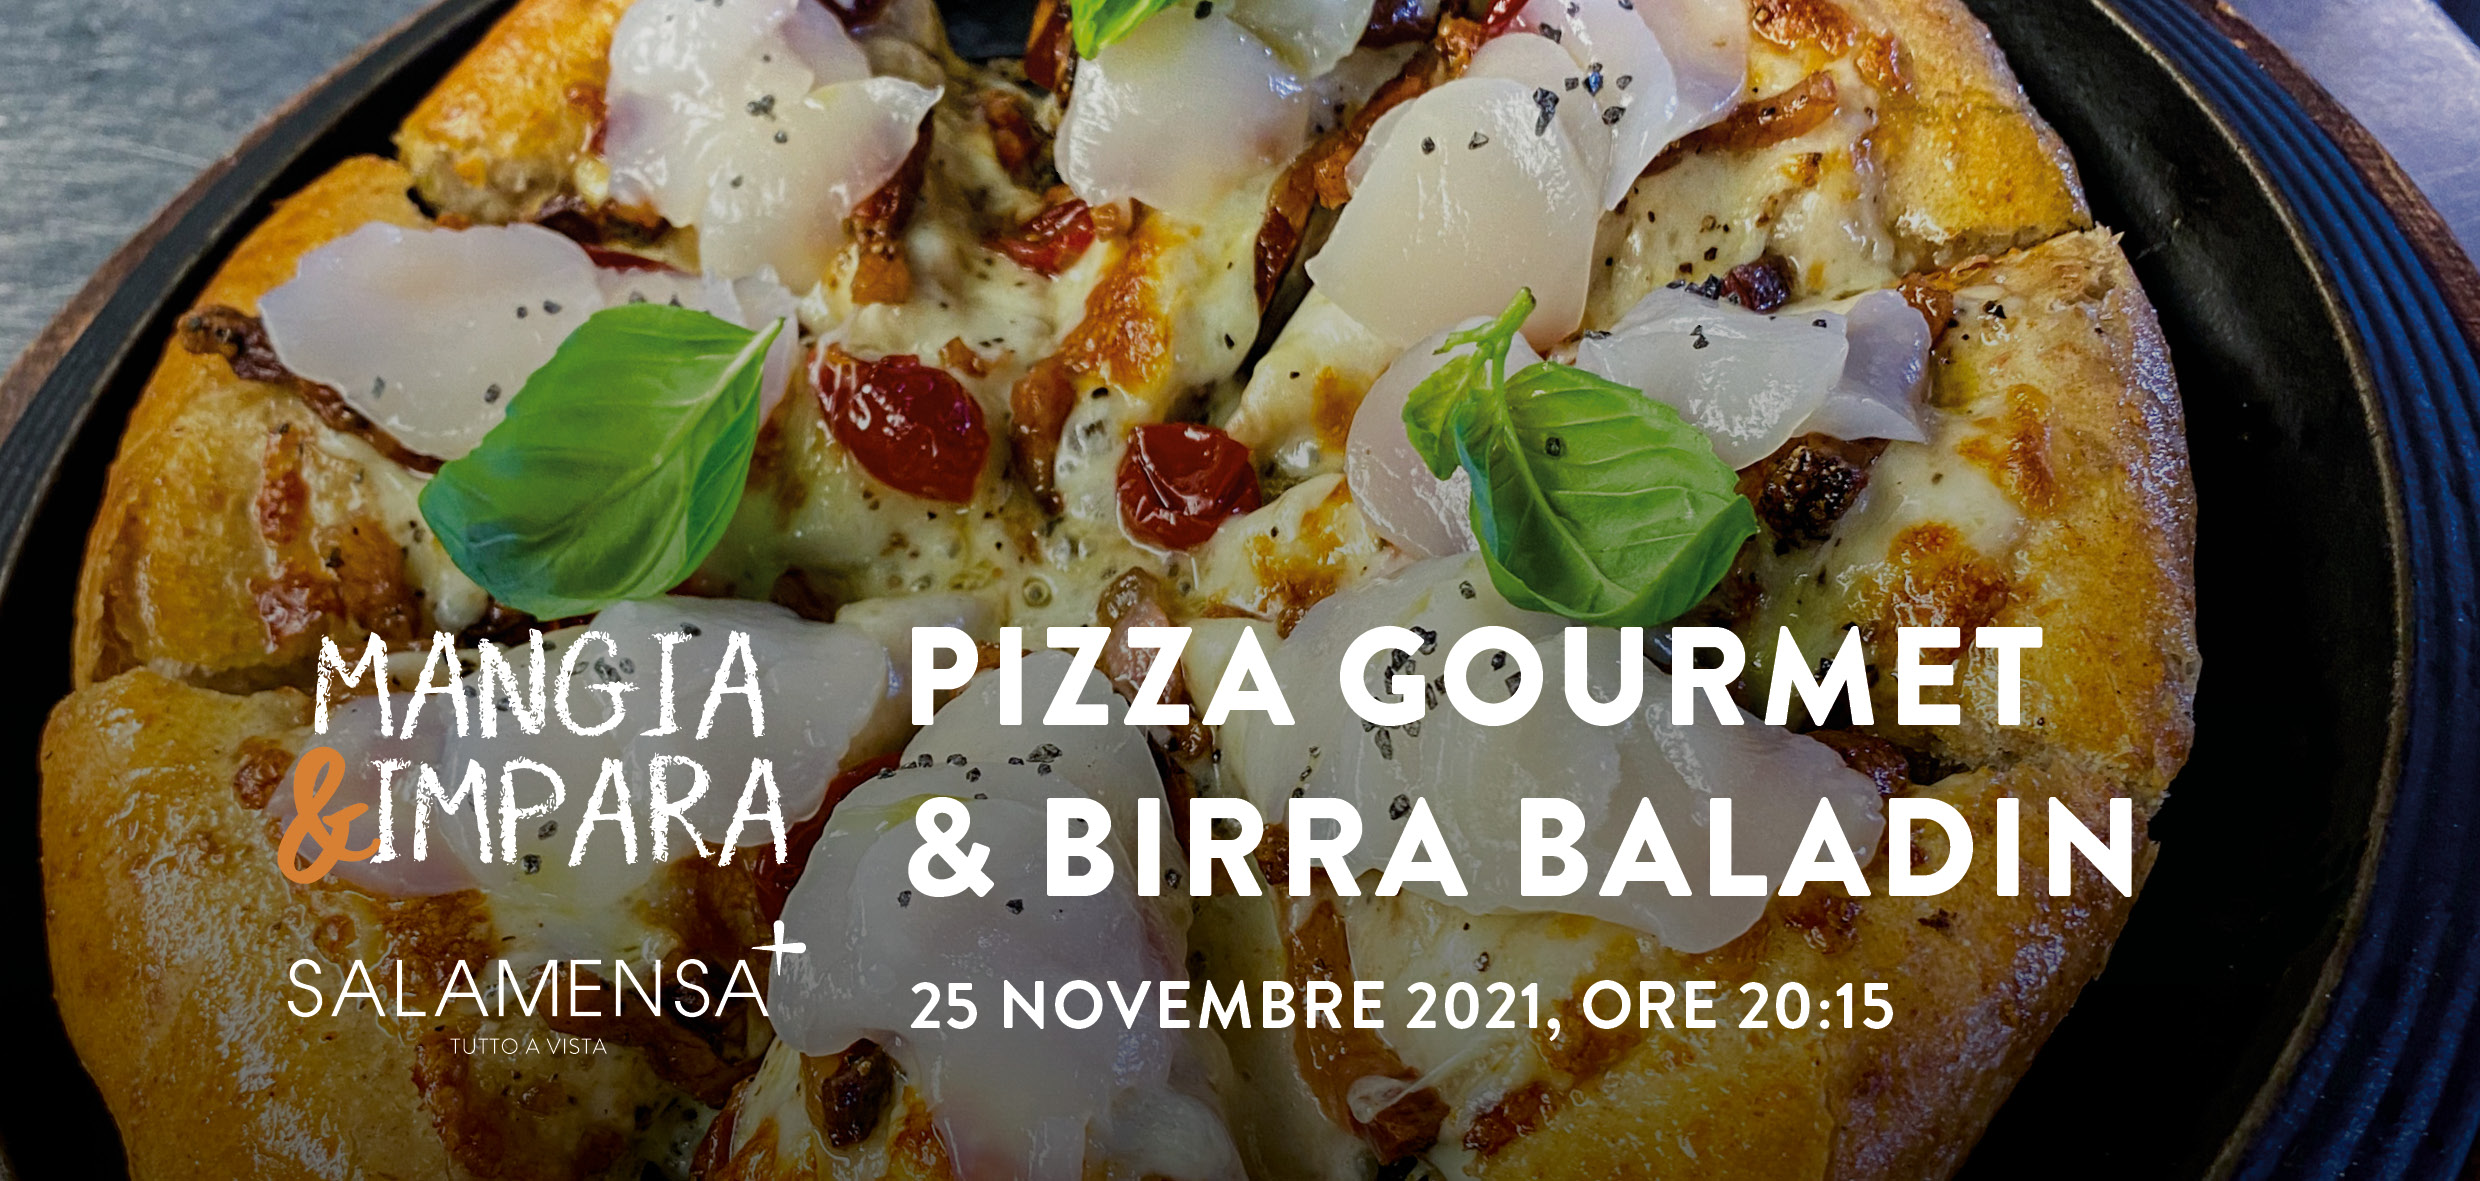 Salamensa | Pizza gourmet & Birra Baladin